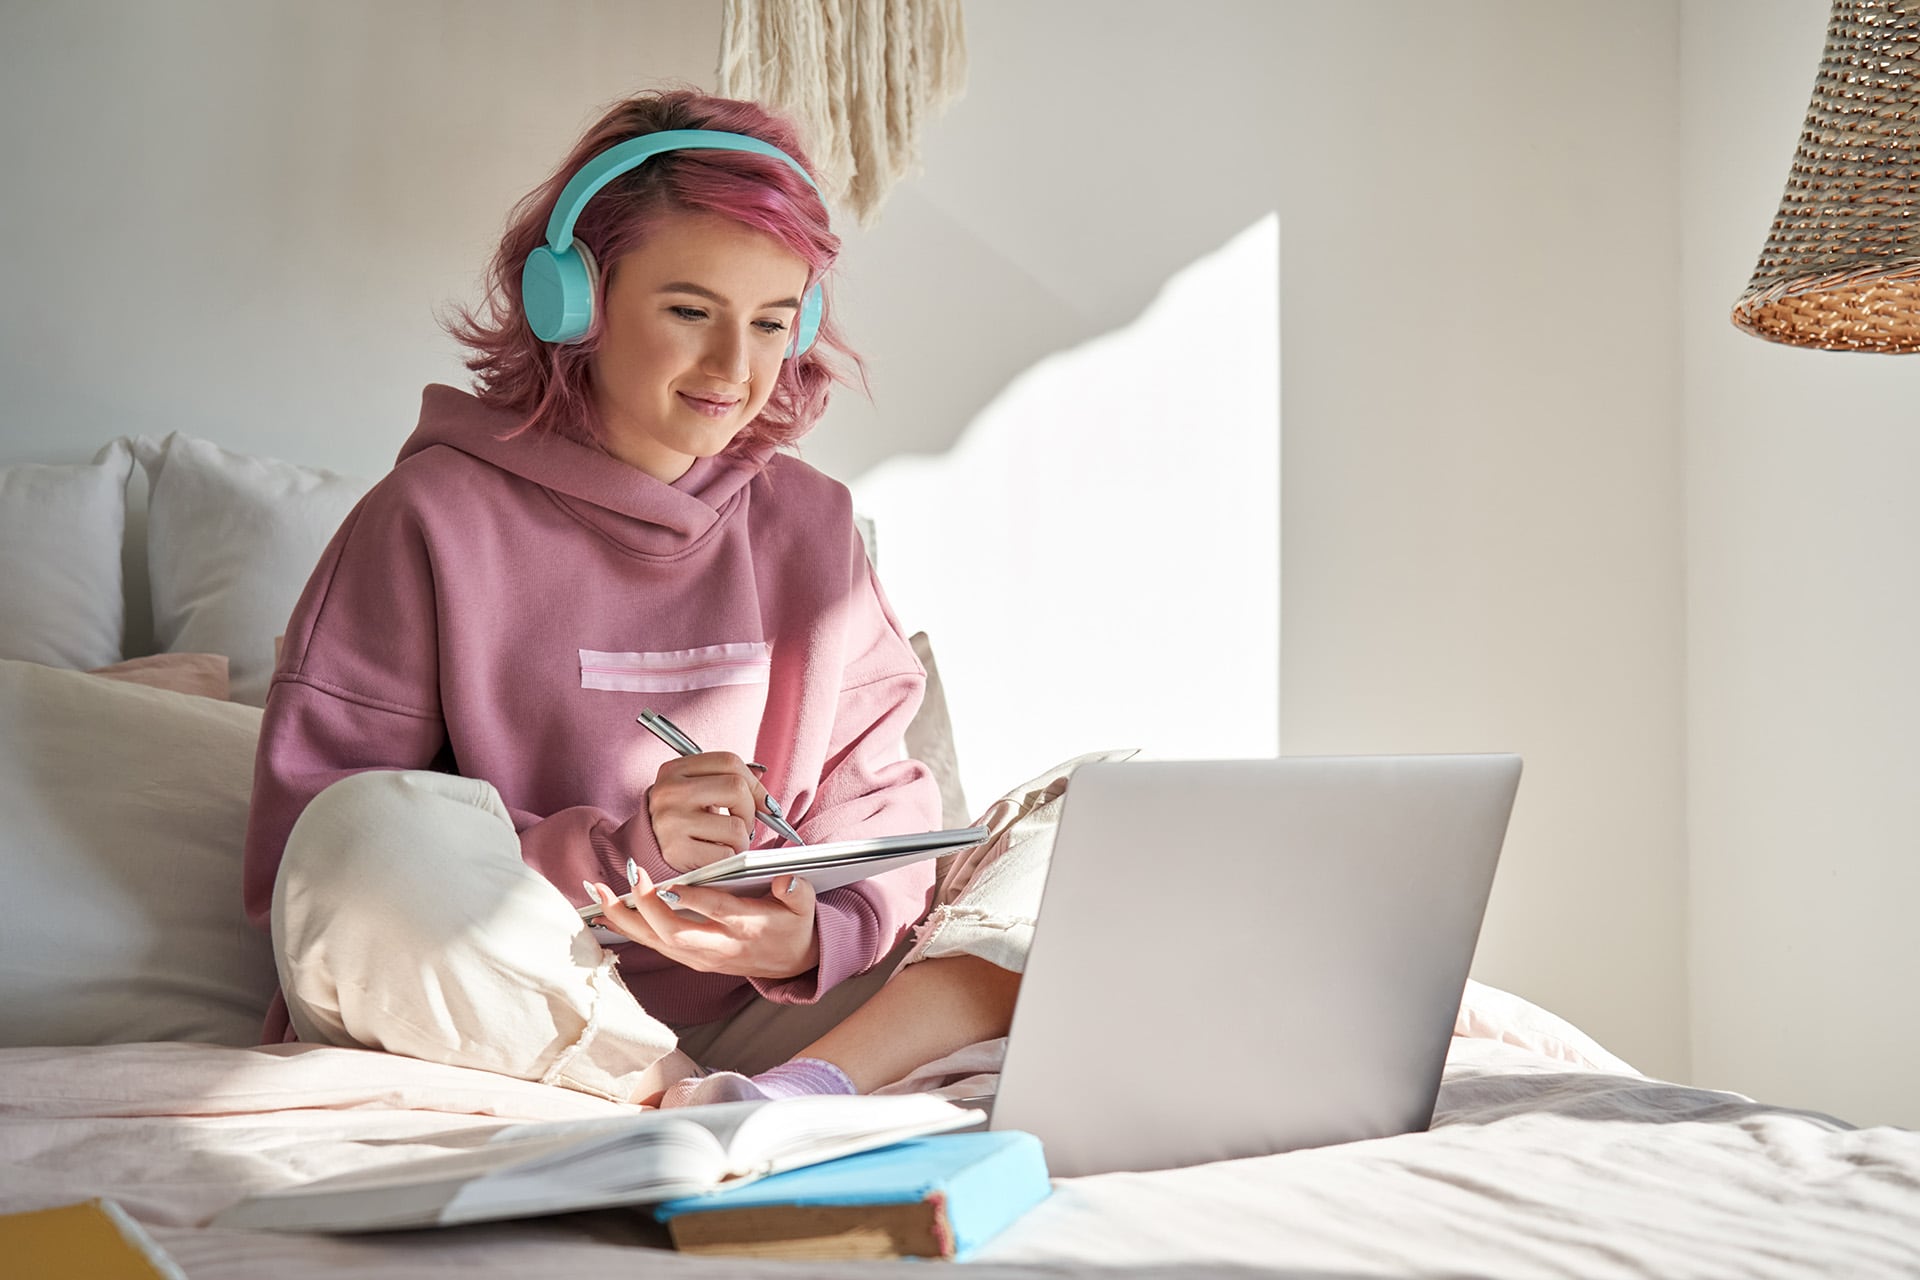 A teenager works on her homework